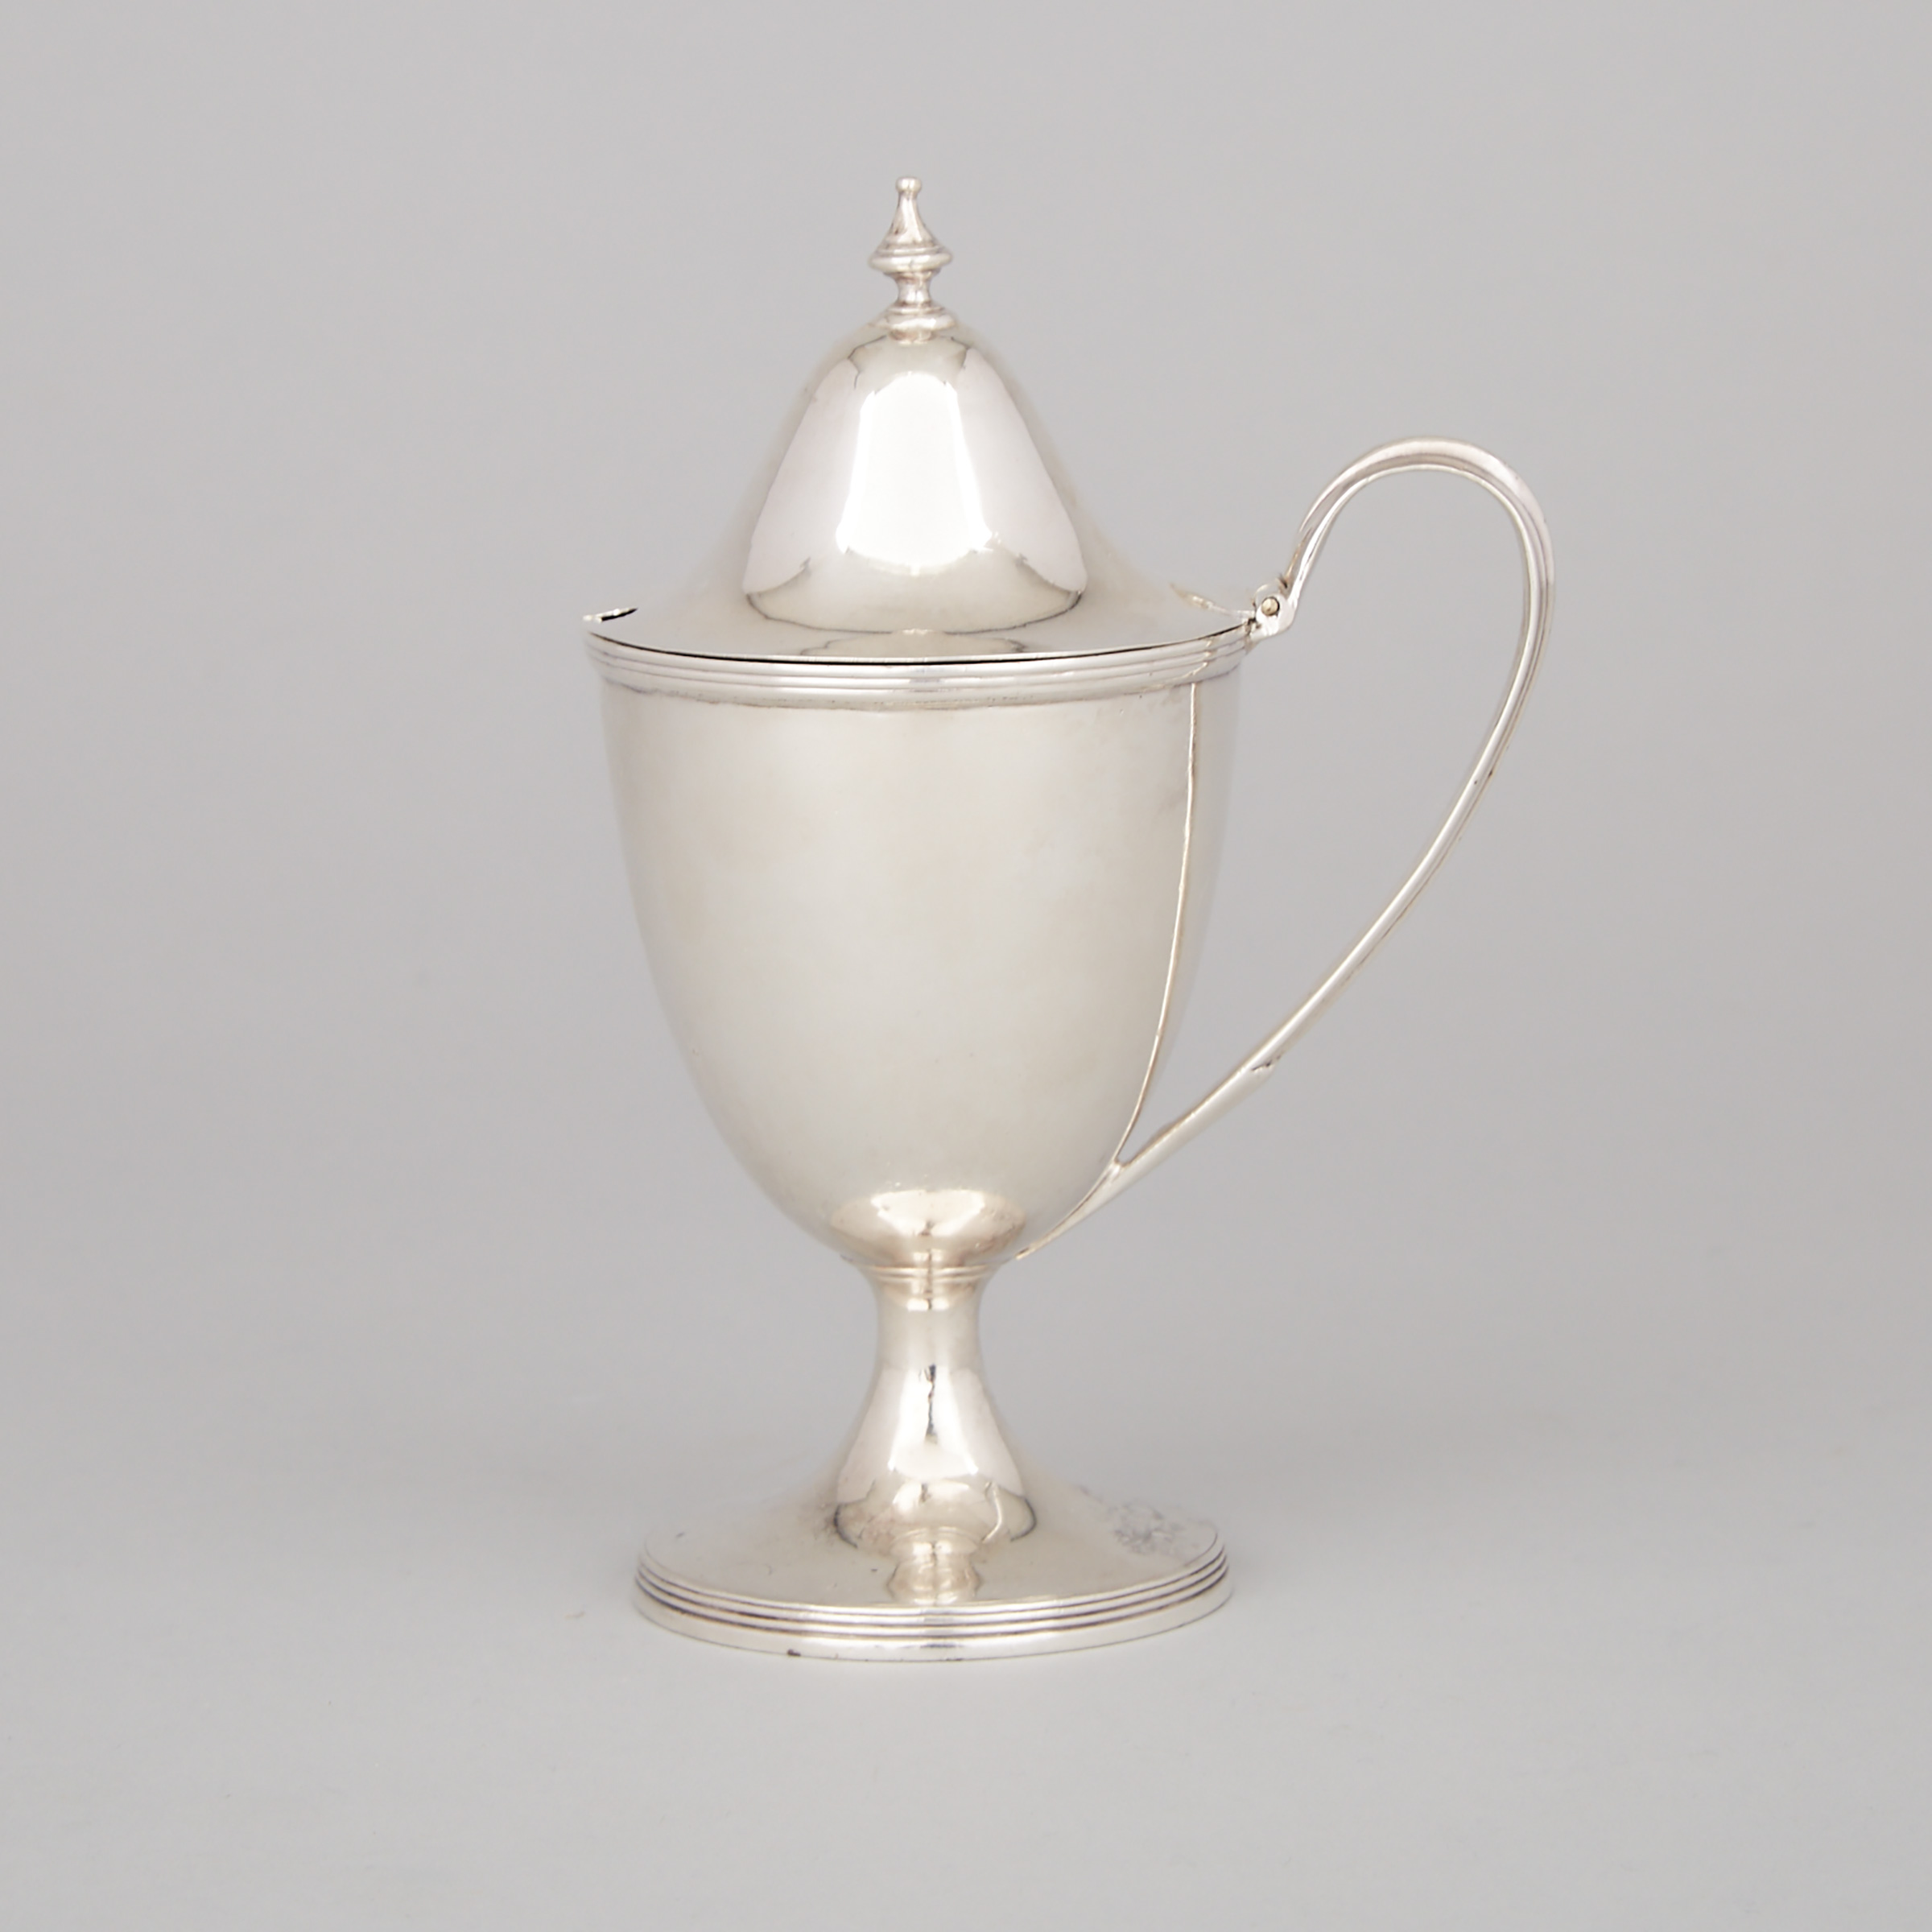 George III Silver Mustard Pot, Henry Chawner, 1791